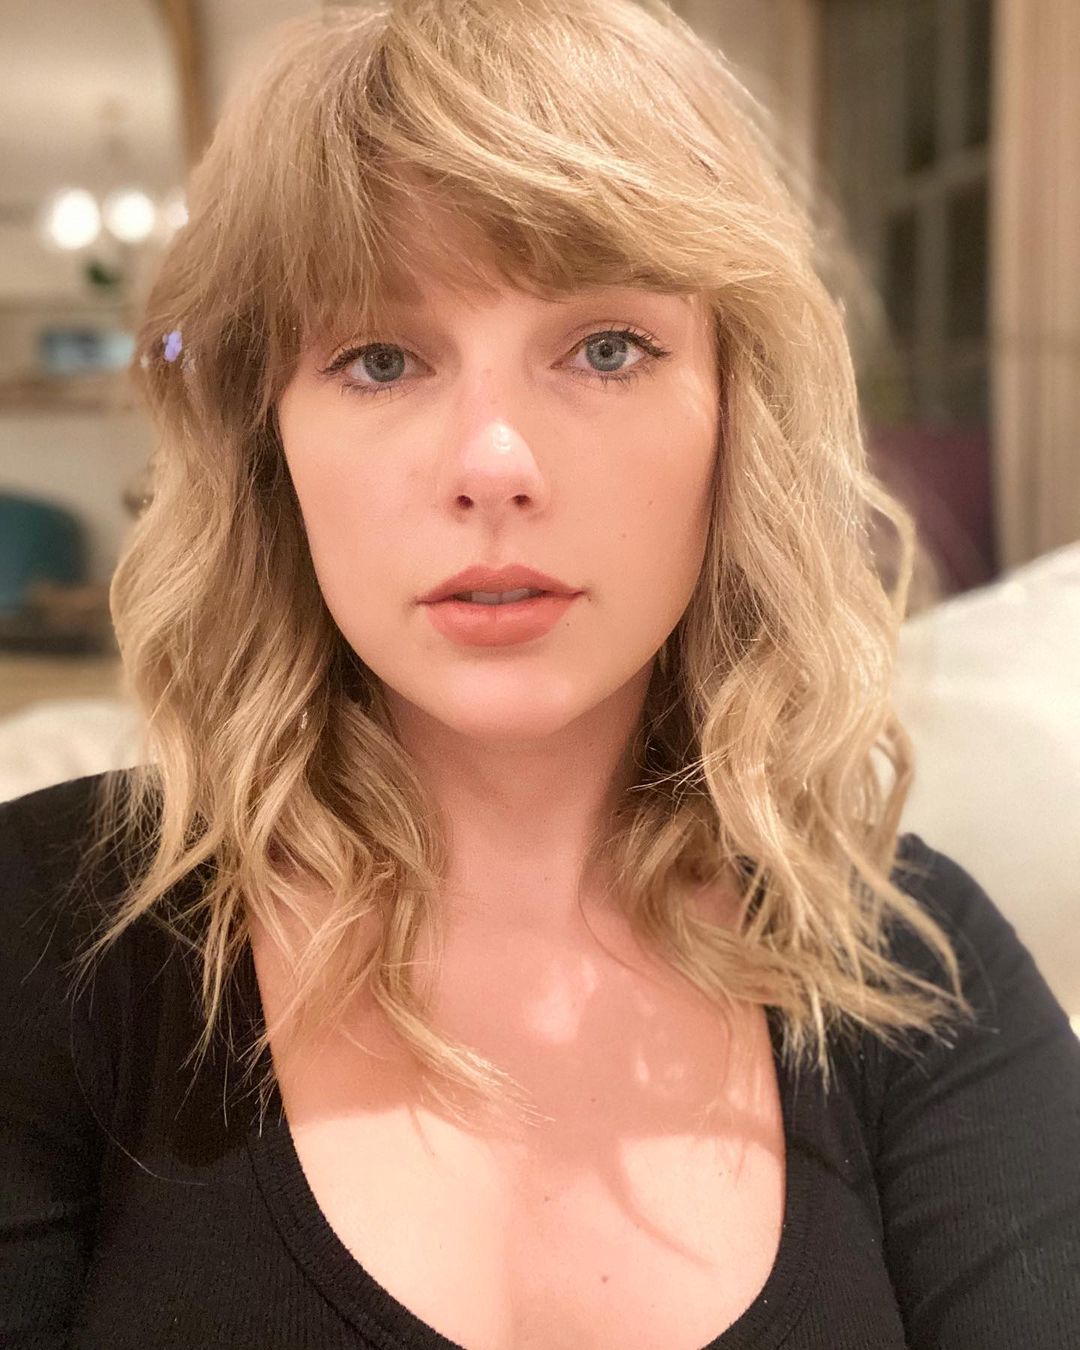 Taylor Swift (Image: Taylor Swift's Instagram) 